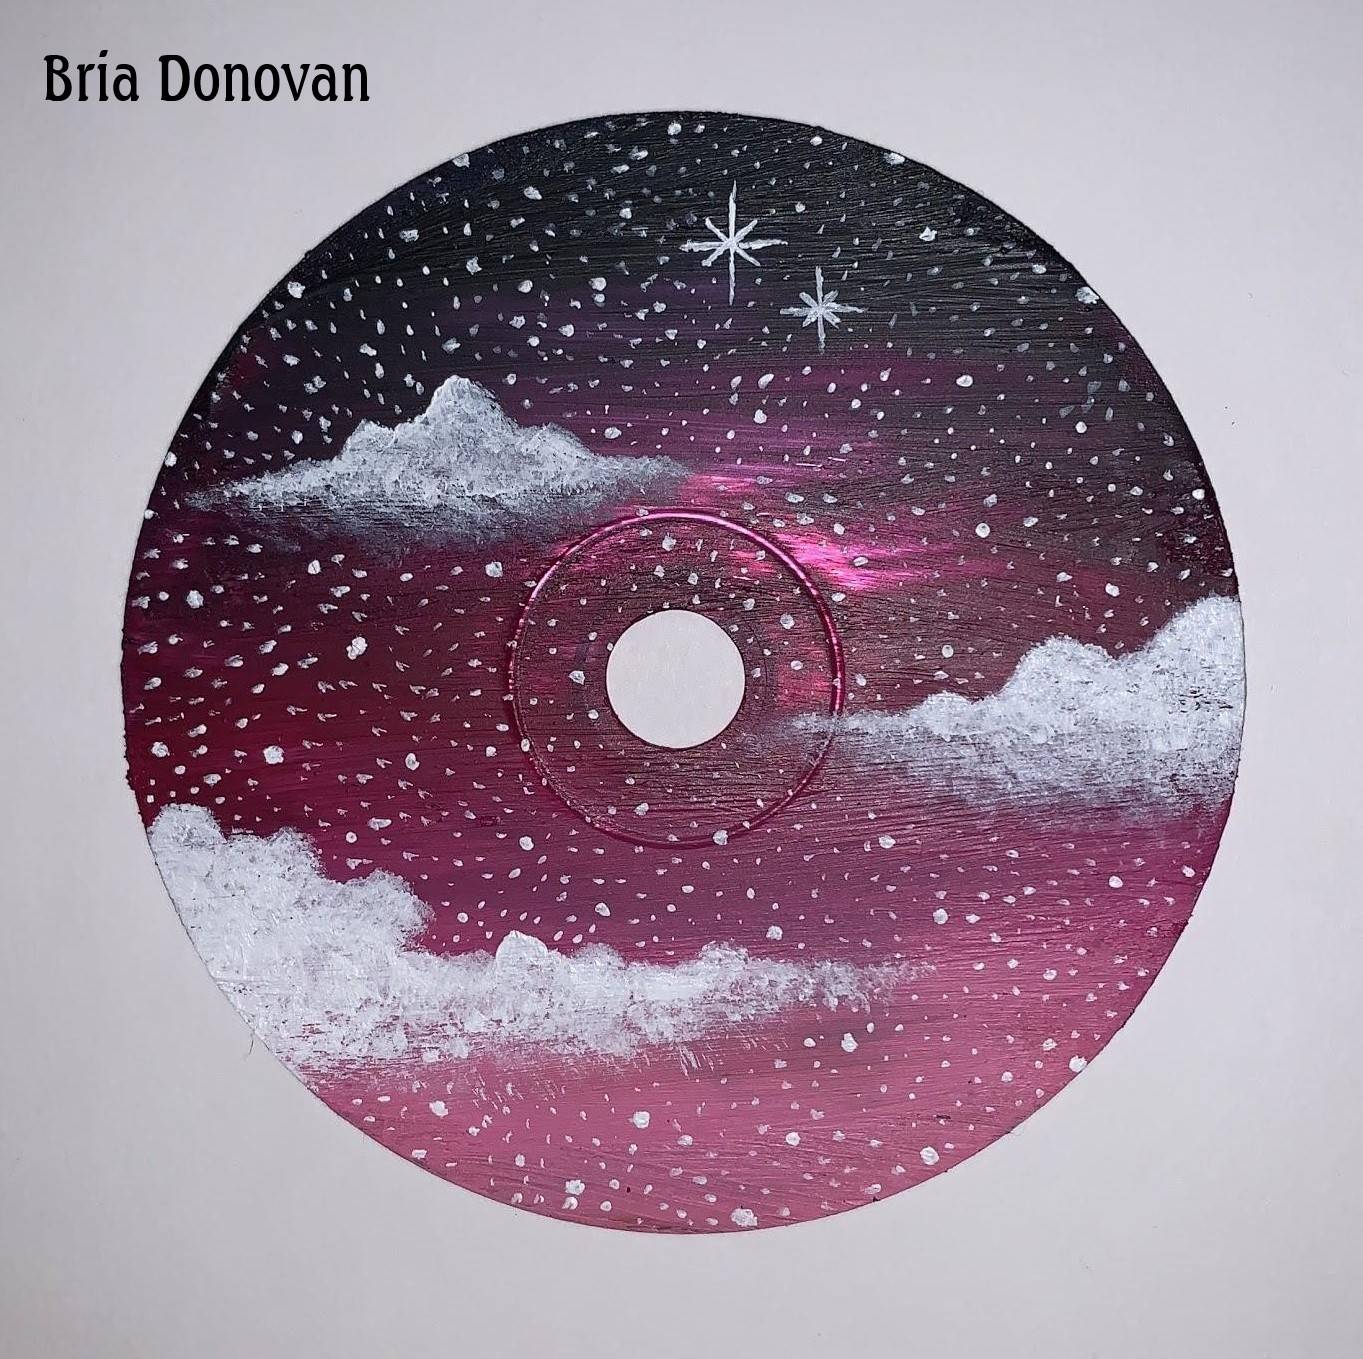 Bria Donovan